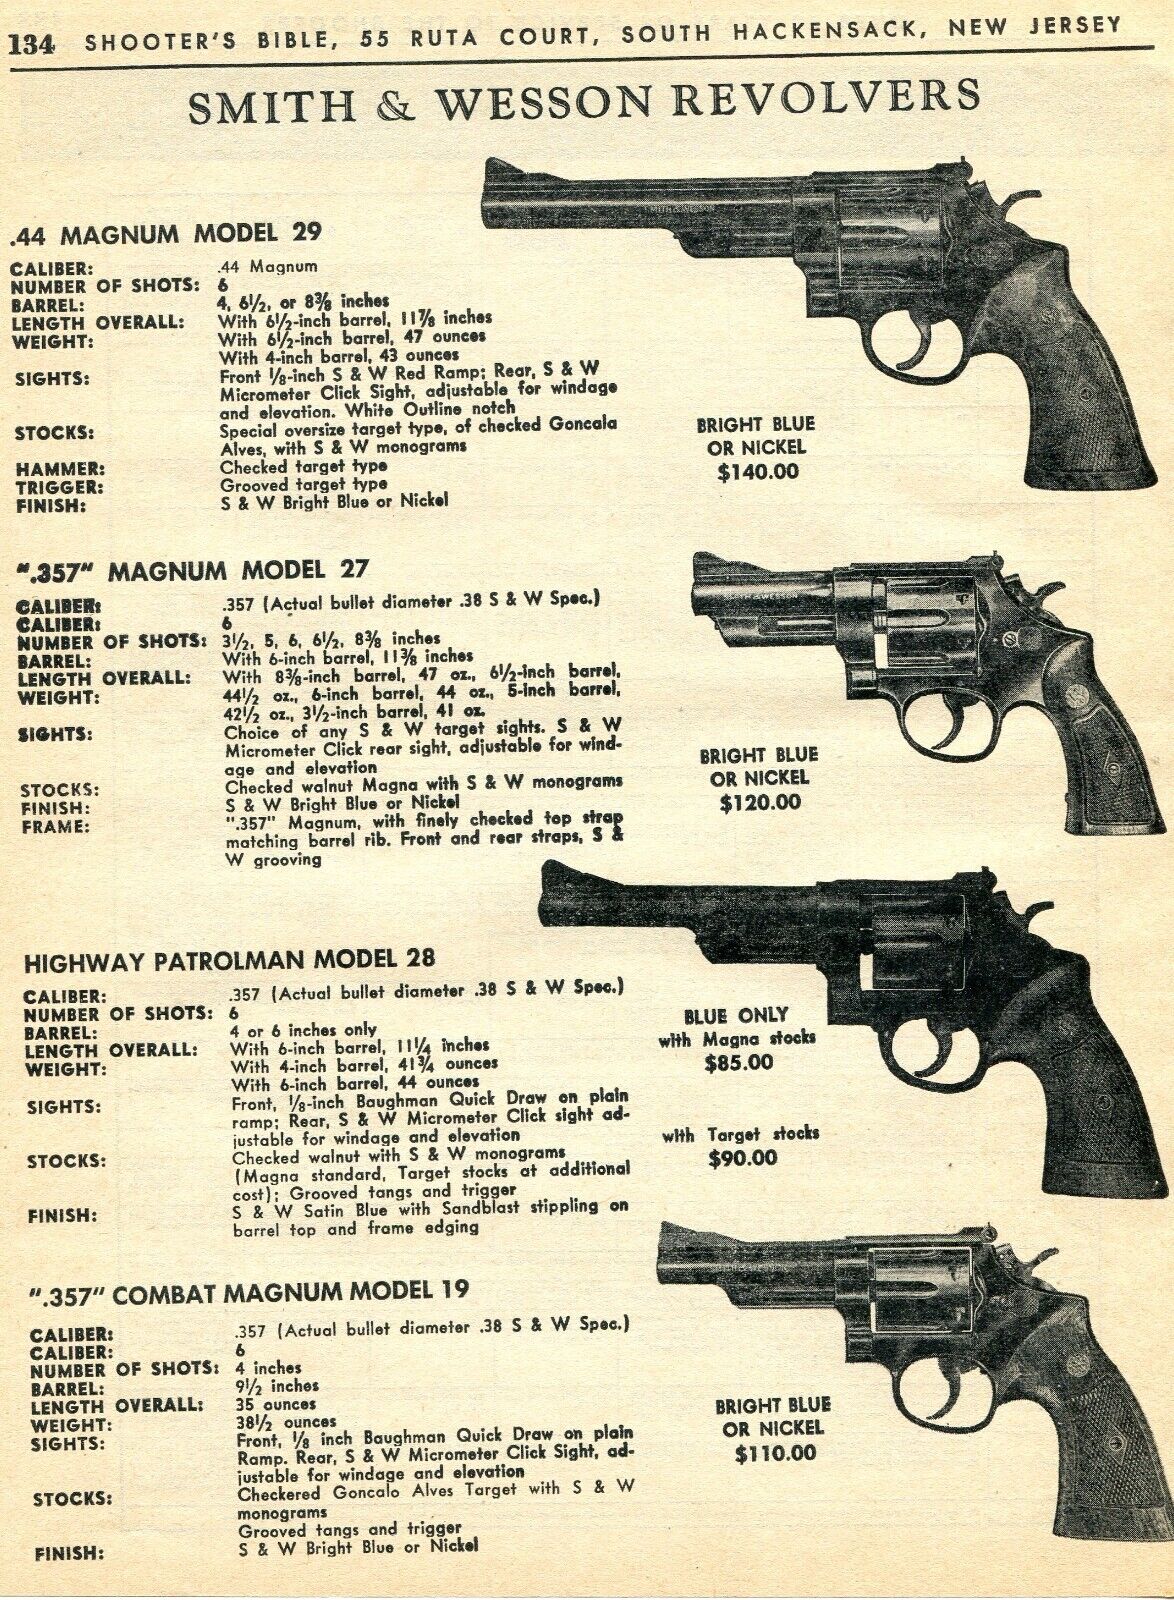 1962 Print Ad of Smith & Wesson S&W Model 29, 27, 28 & 19 Revolver